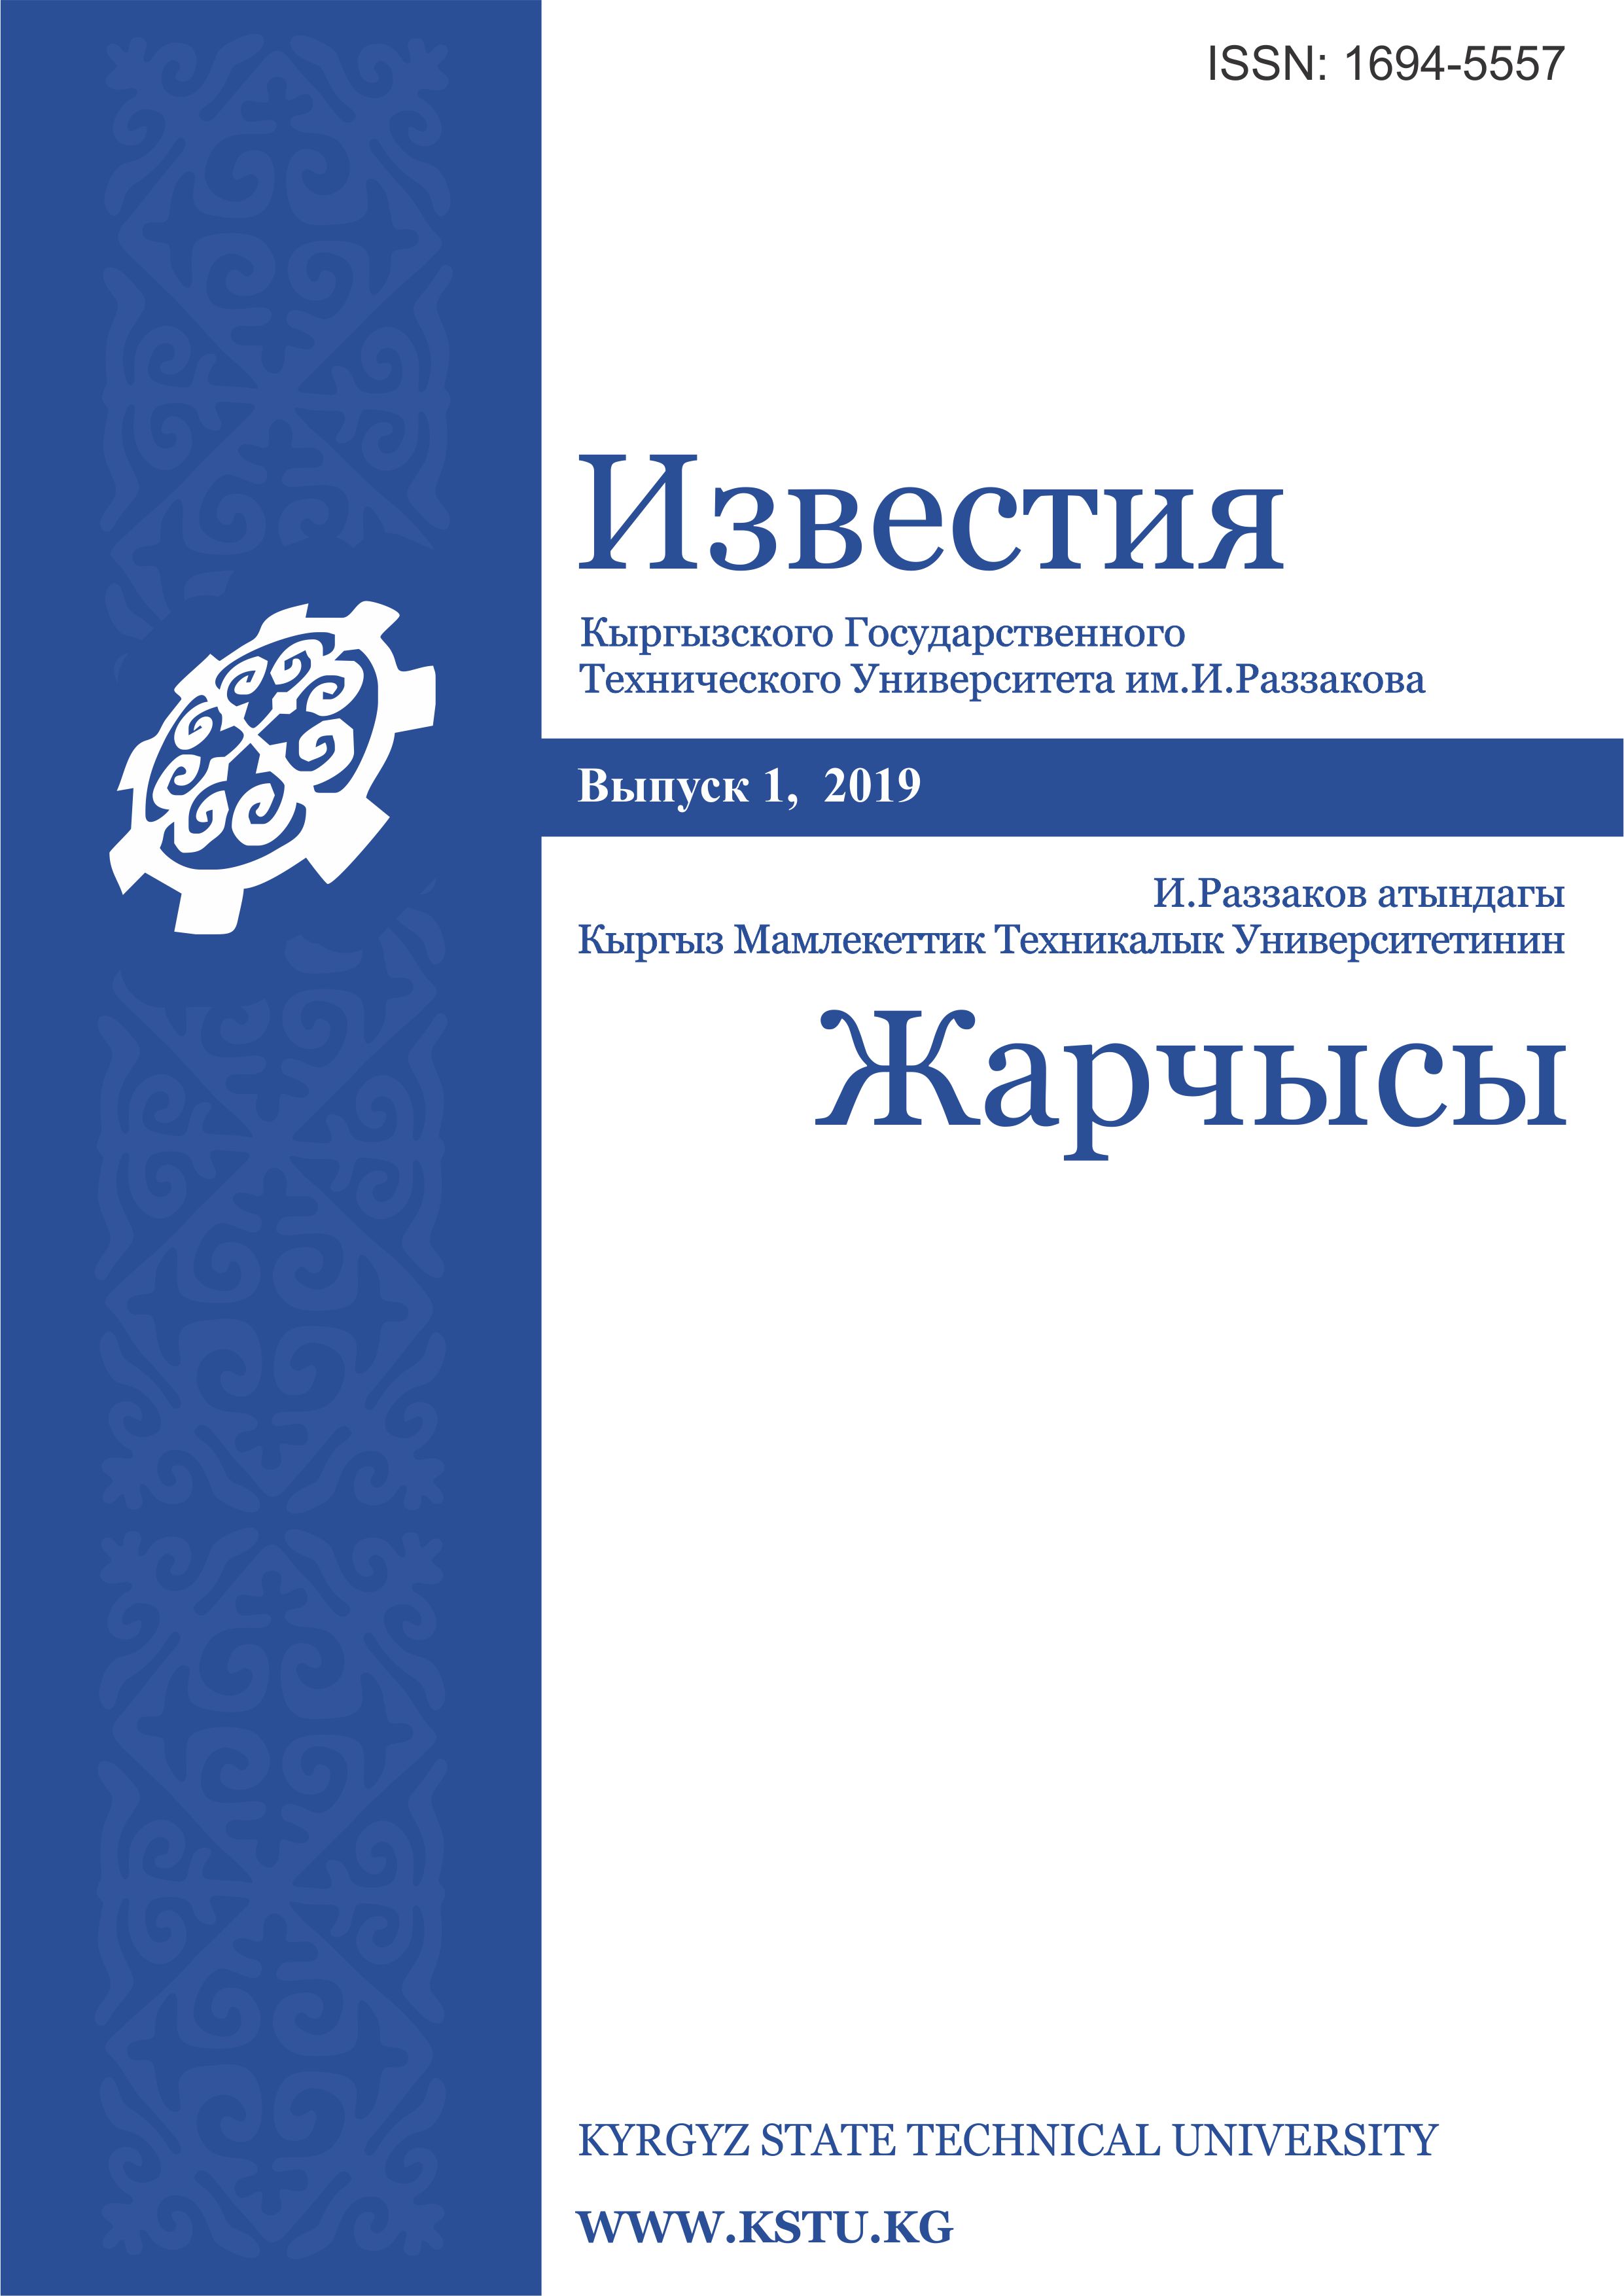 Journal "News of KSTU named after I. Razzakov"